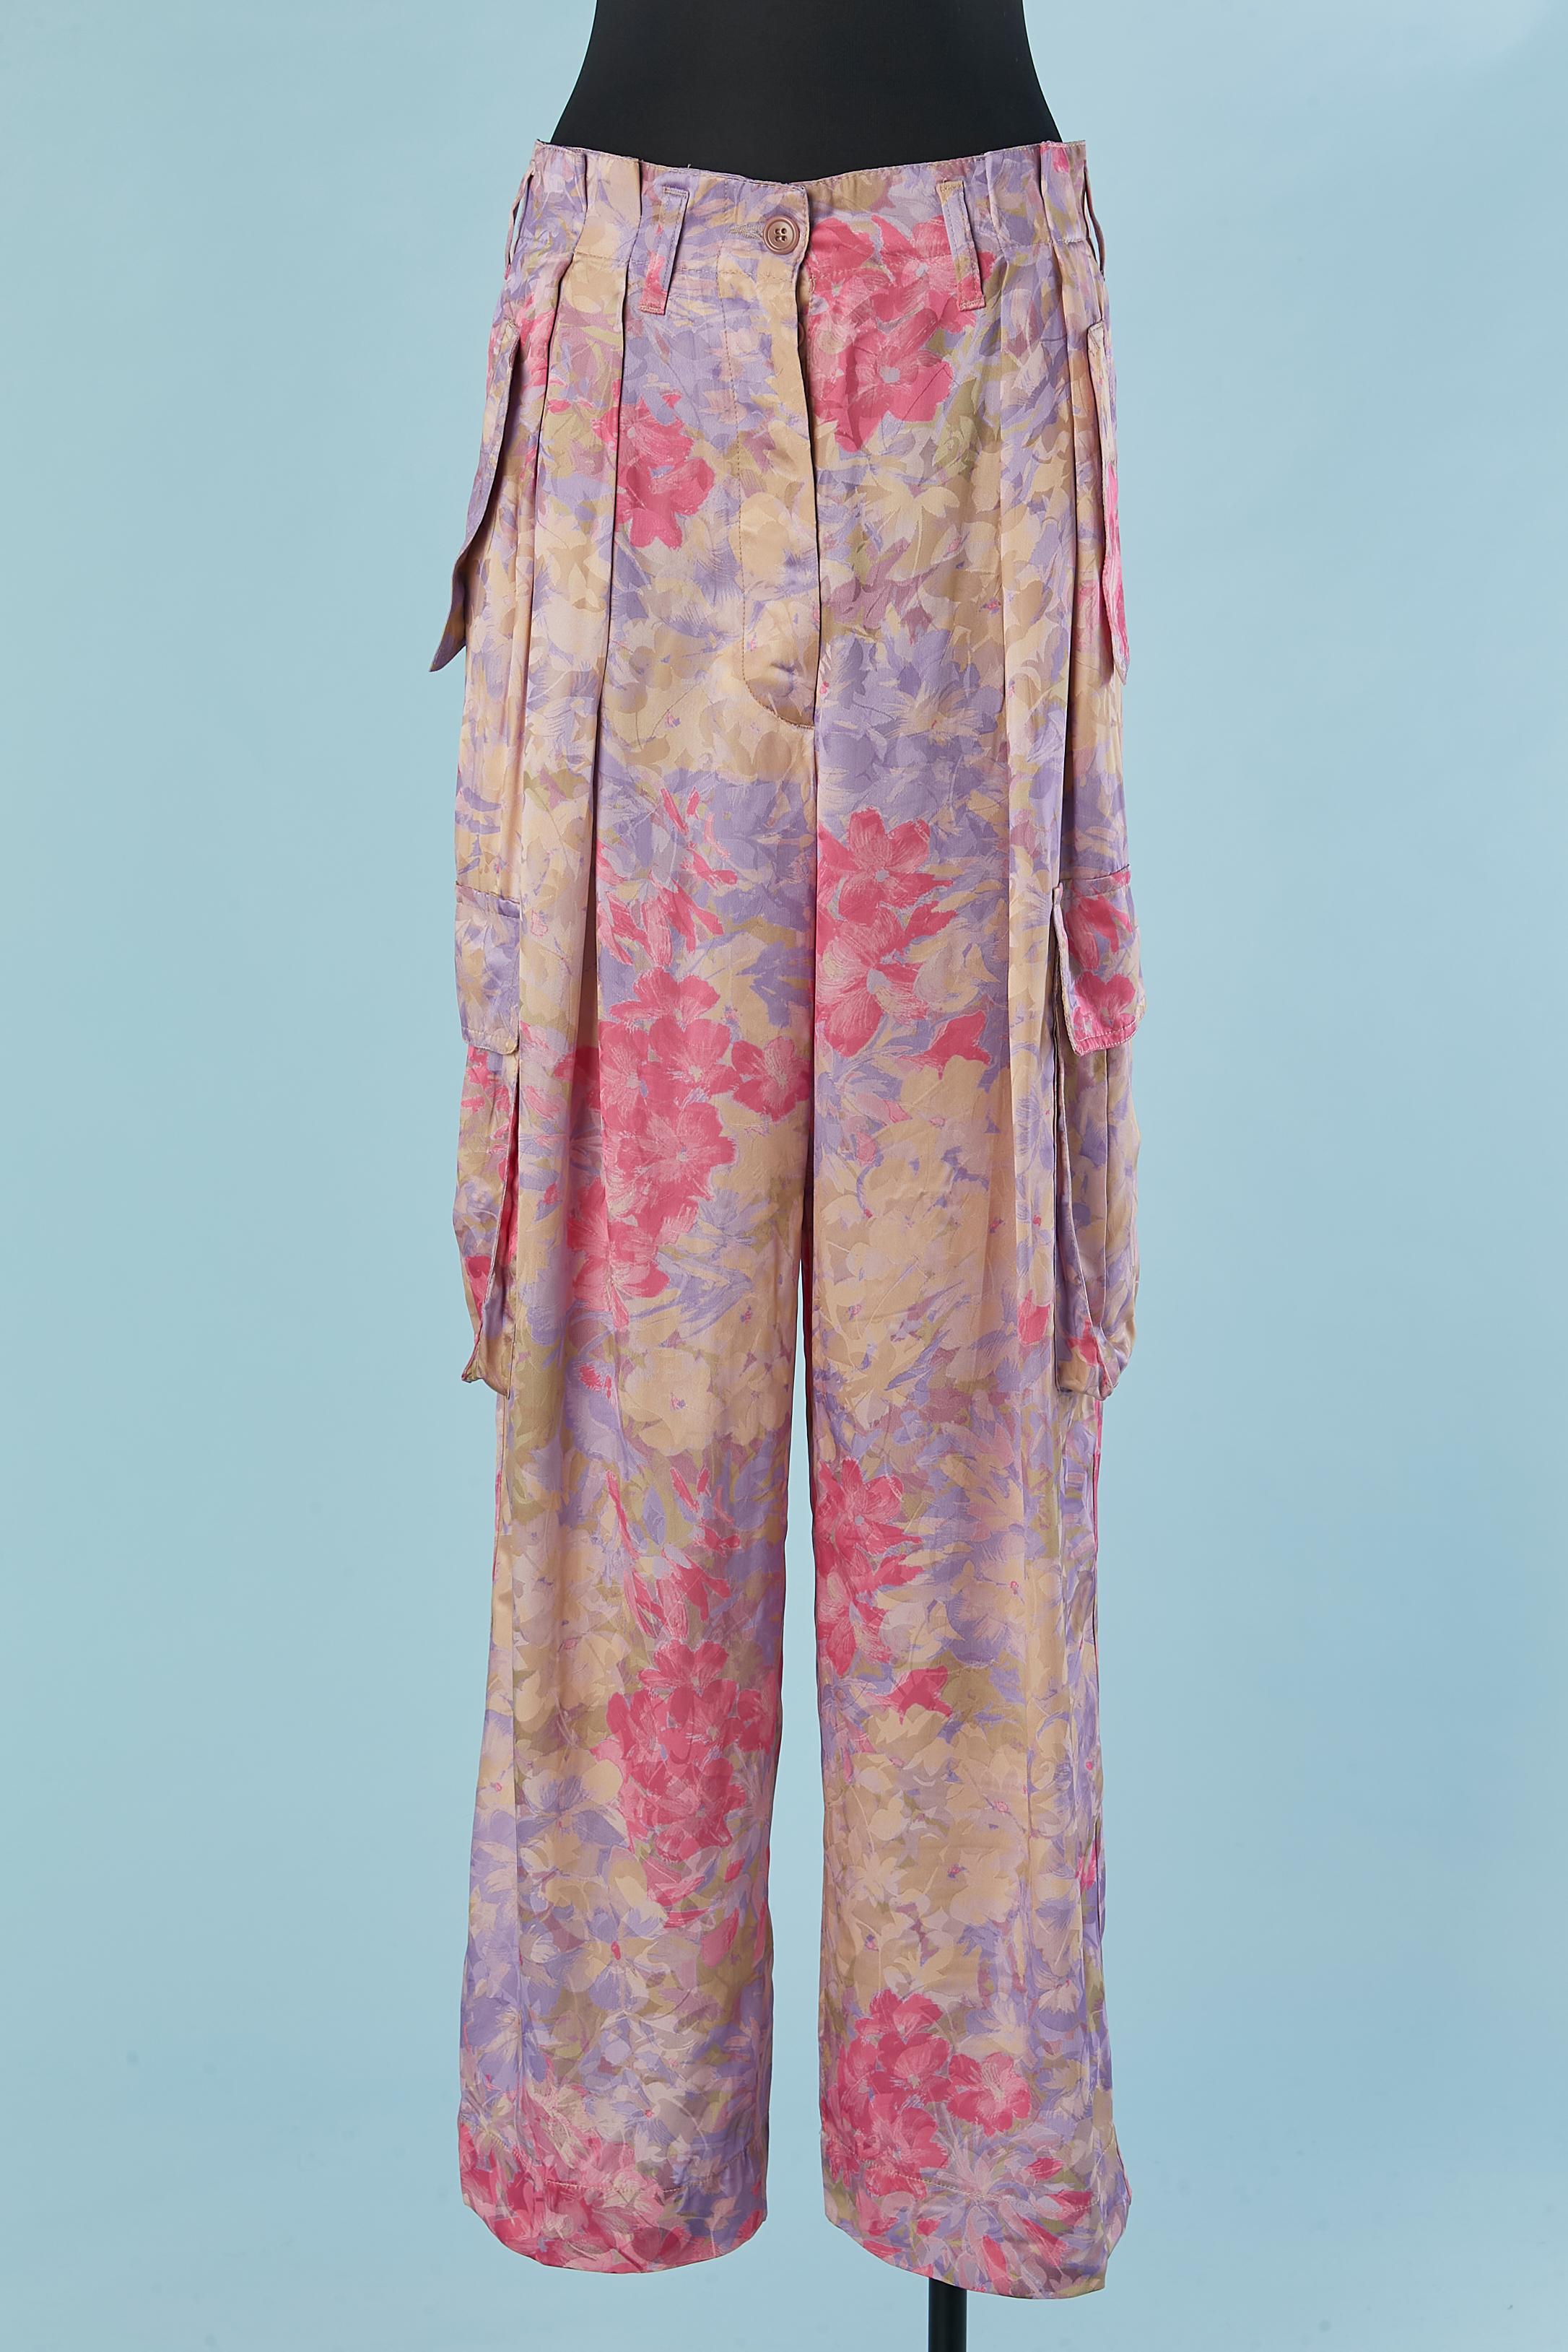 Trouser suit in flower jacquard pattern Dries Van Noten  For Sale 5